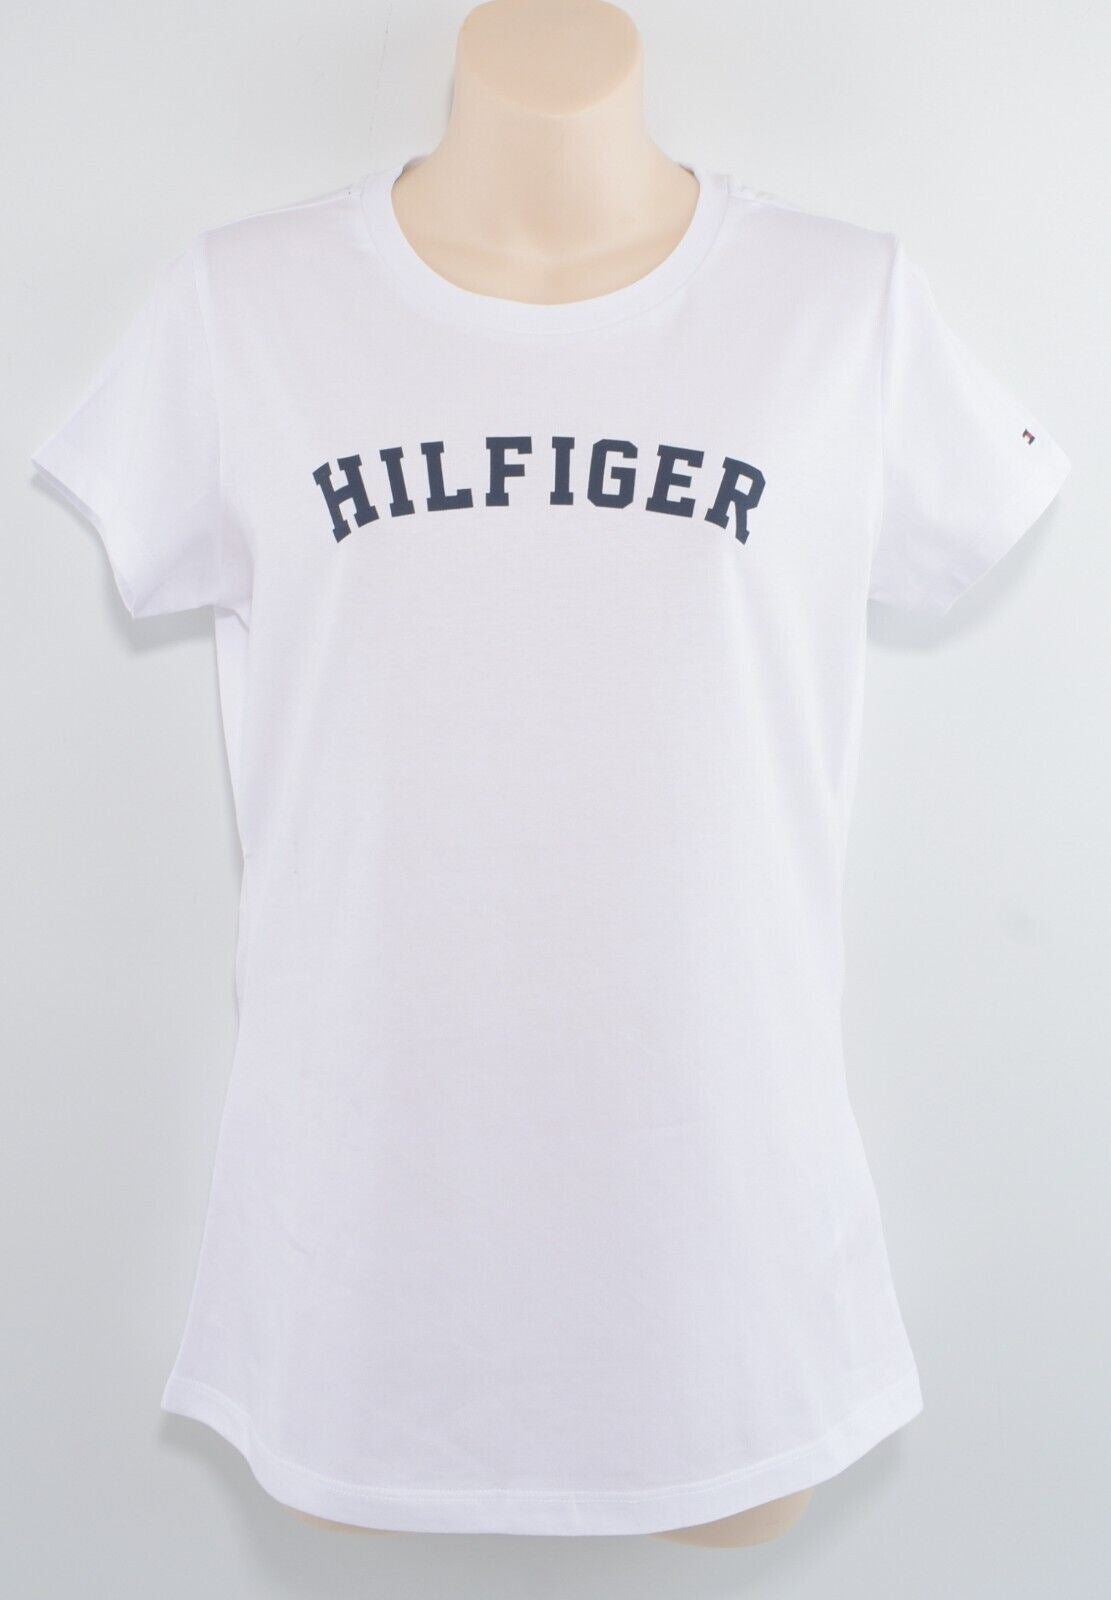 TOMMY HILFIGER Women's ORGANIC COTTON Logo T-shirt, White, size S (UK 10)